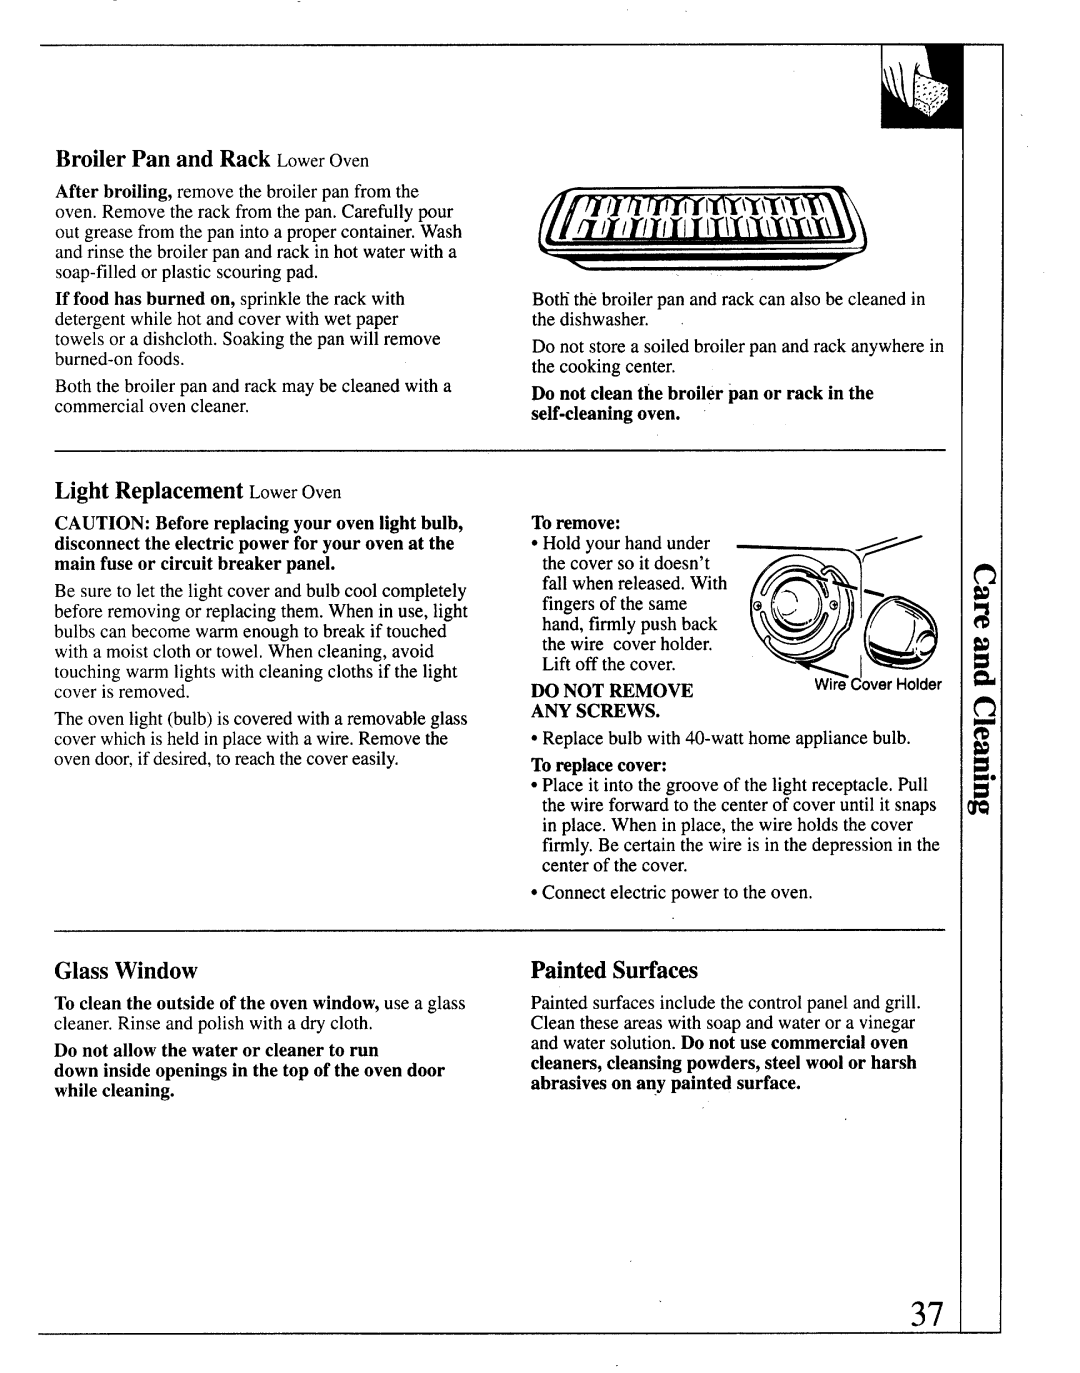 GE JKP64, JKP66, JKP65 manual BroilerPan and Rack LowerOven, Light ReplacementLowerOven, Glass Window, Painted Sufiaces 